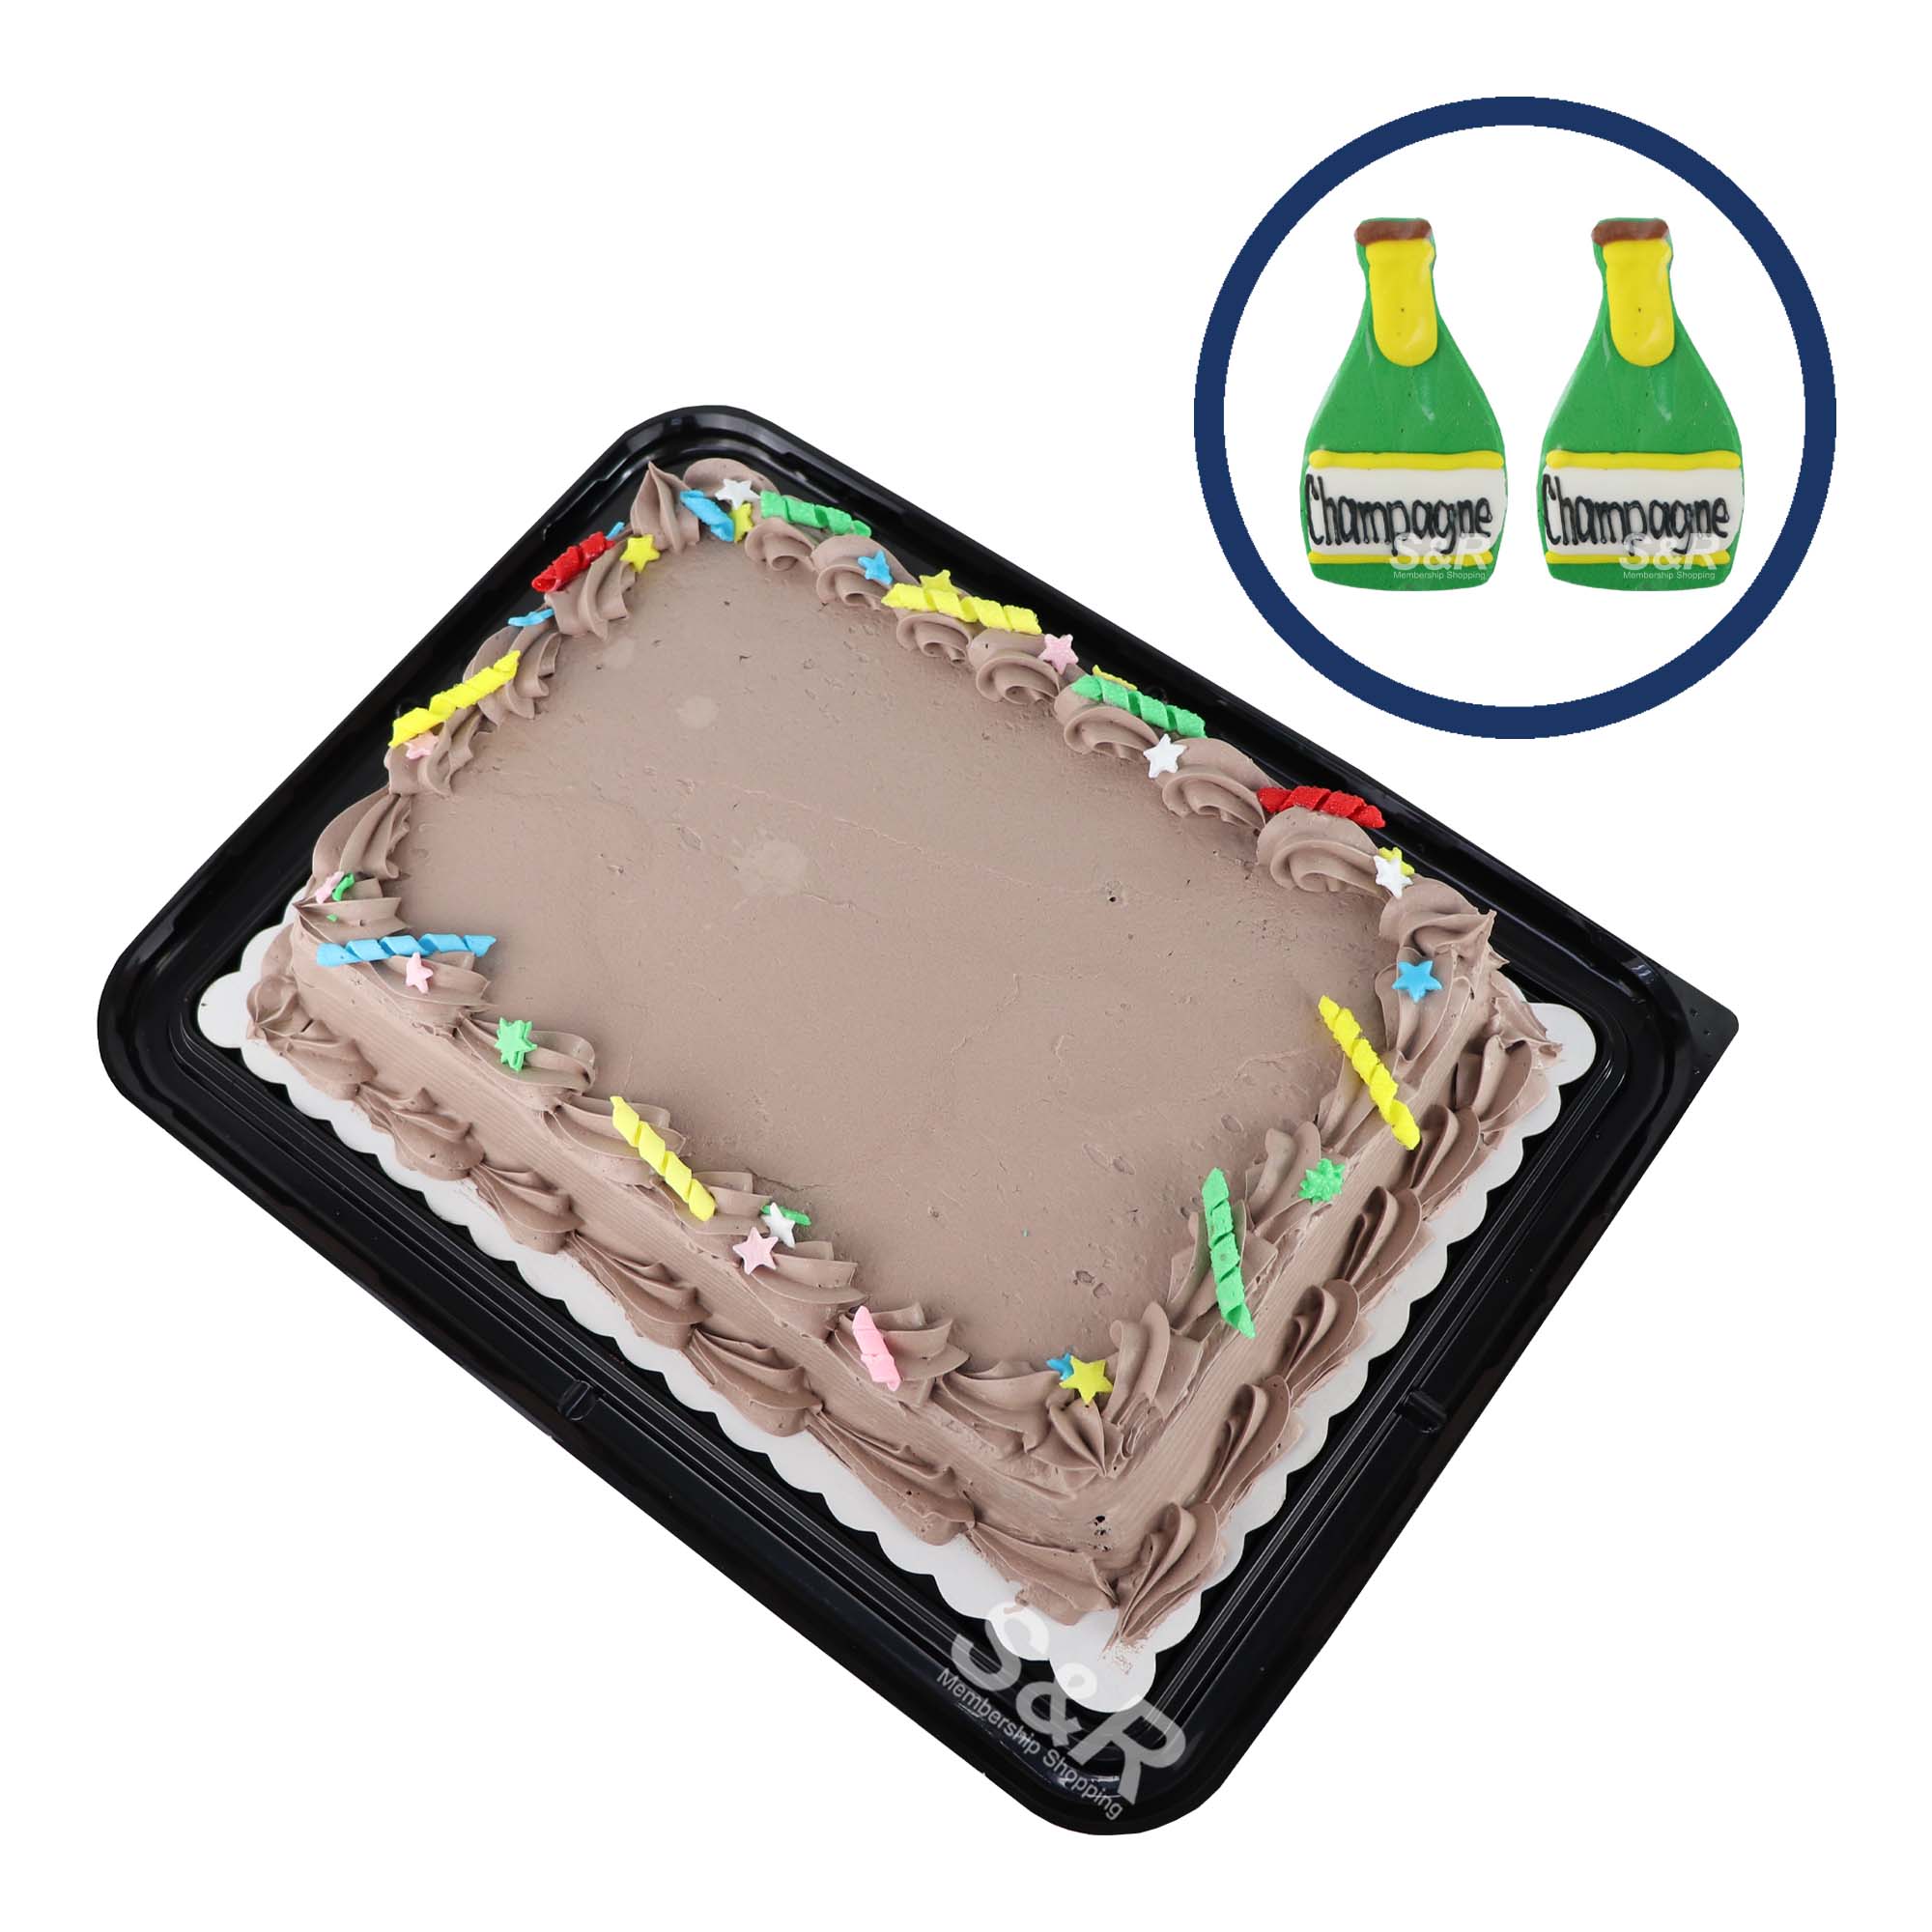 S&R Choco Celebration Cake 1pc